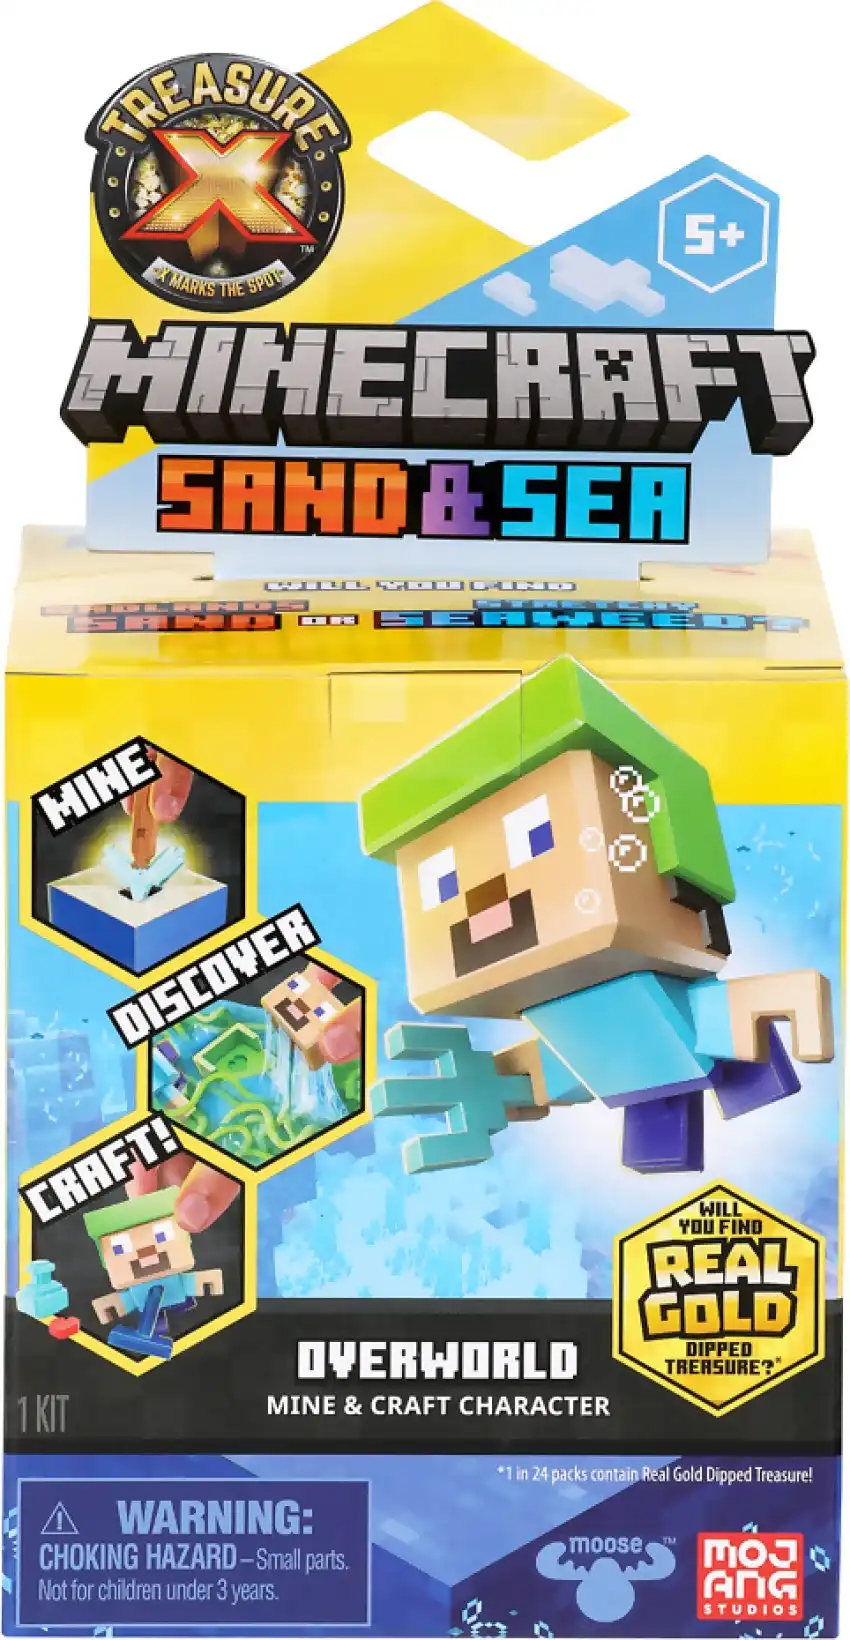 Treasure X - Minecraft Sand & Sea Overworld Mine & Craft Character